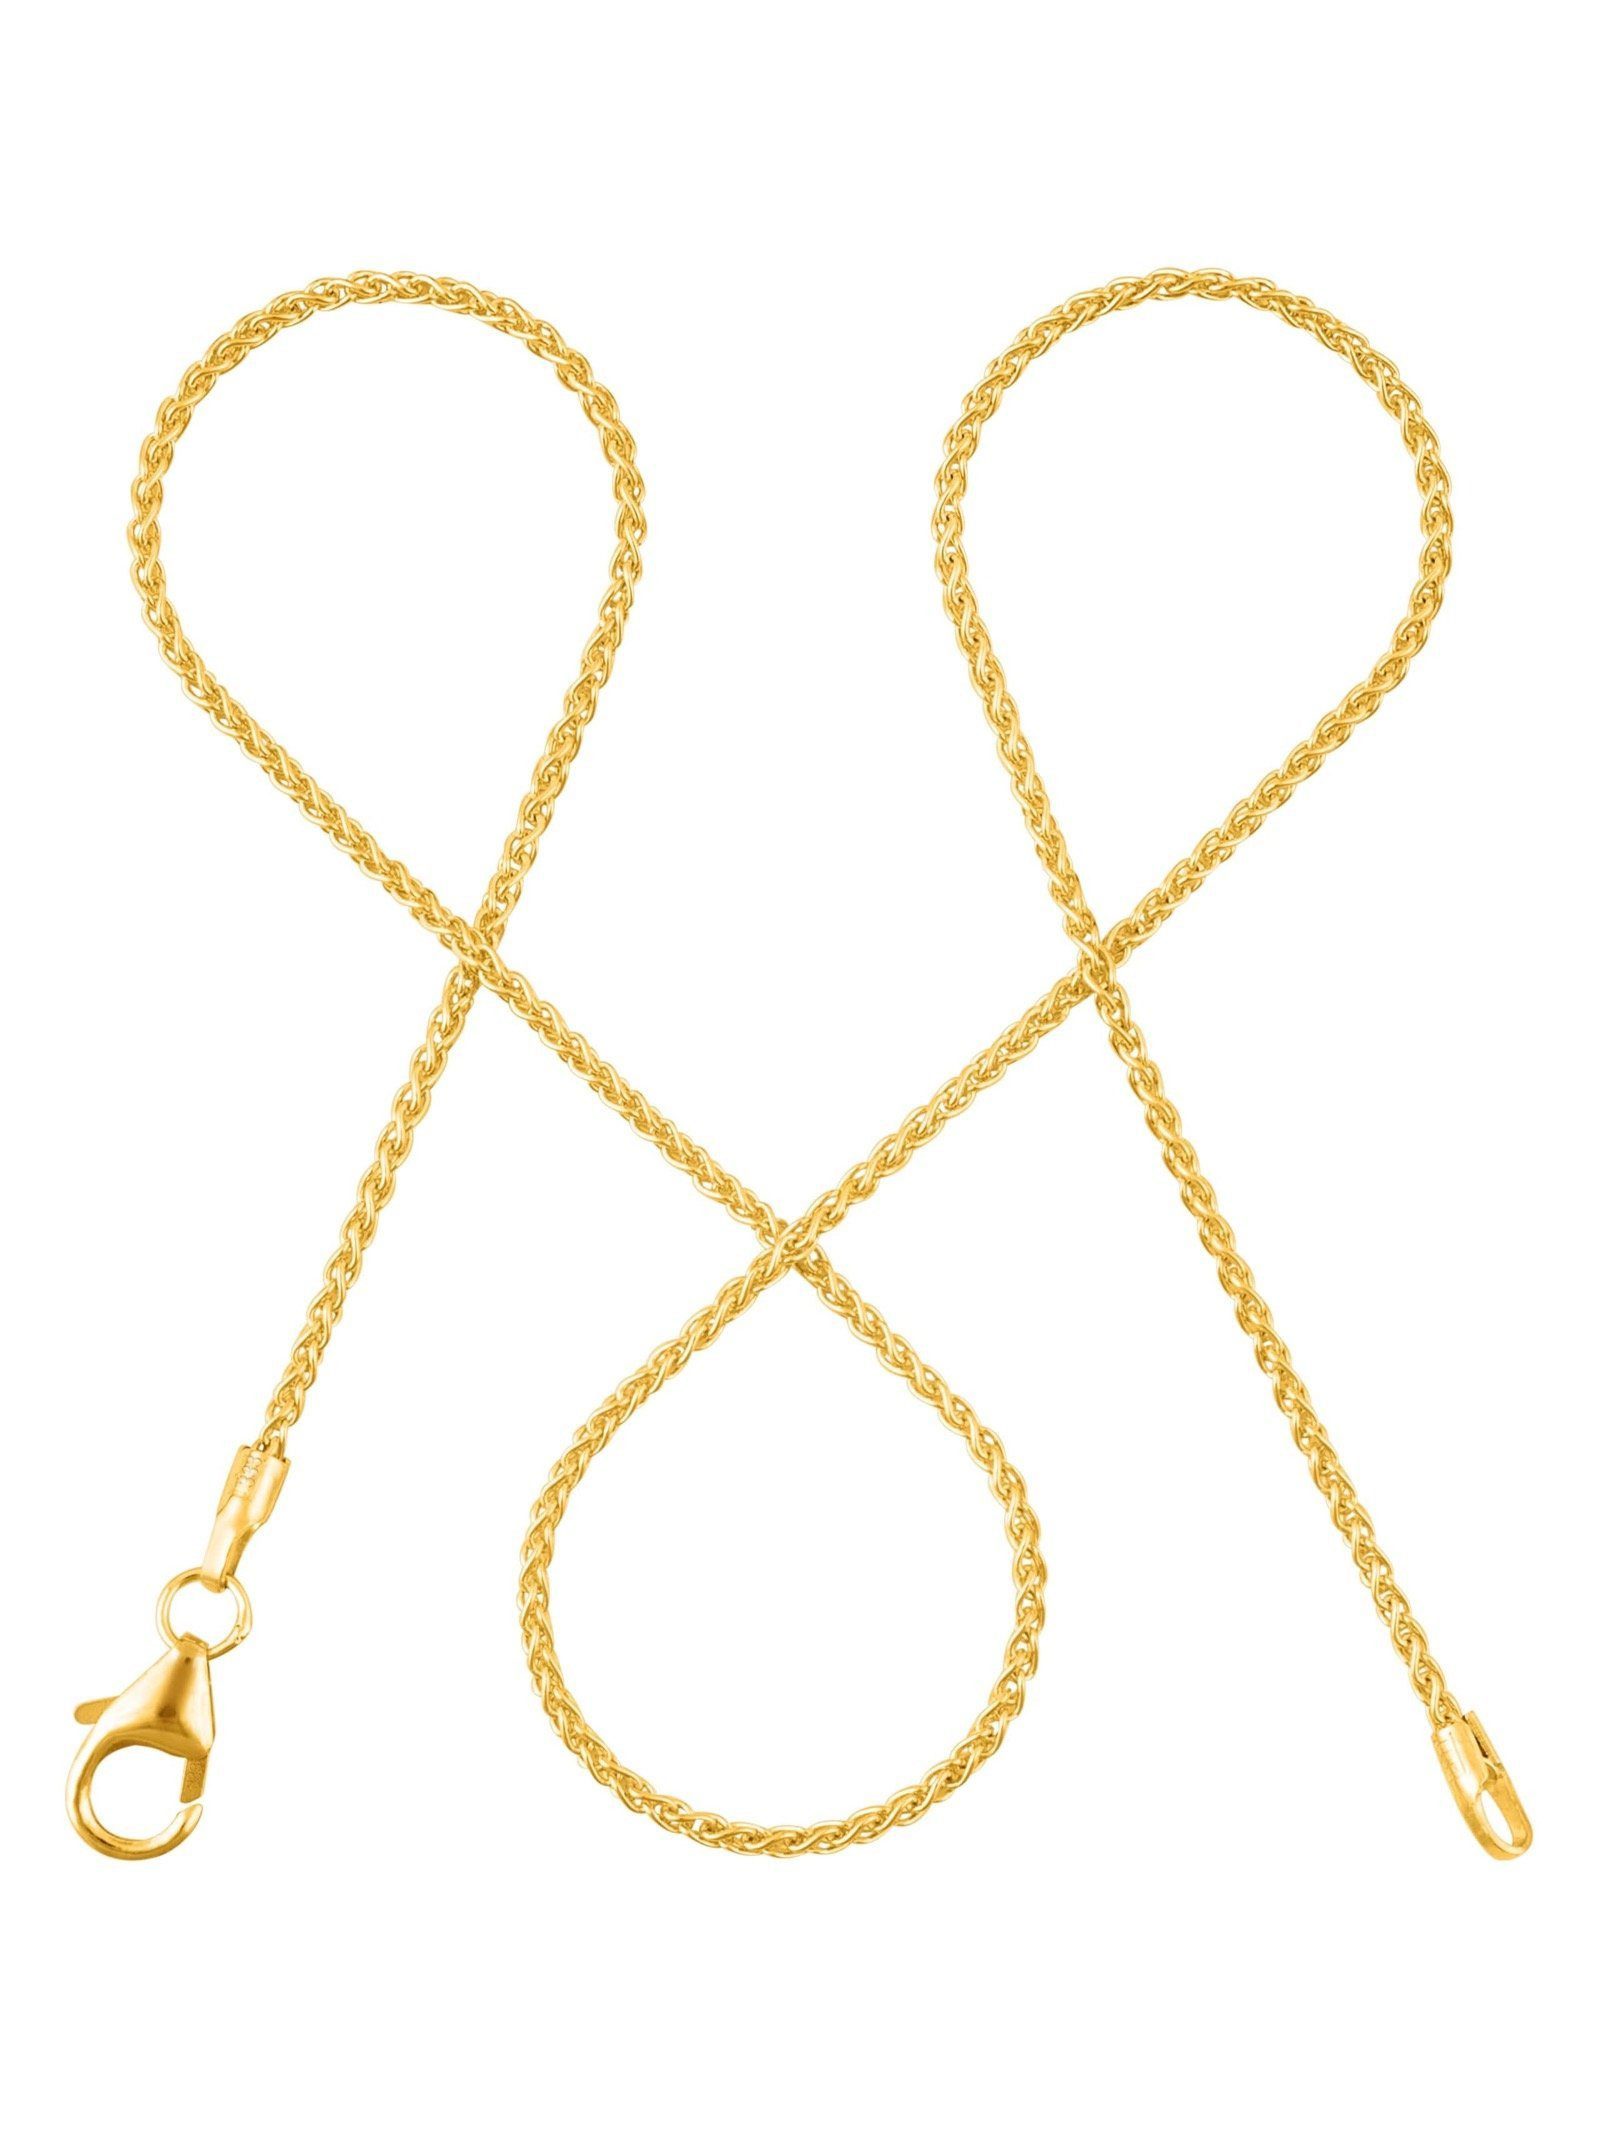 modabilé Goldkette Zopfkette 1,3mm 333 Gold, Halskette Damen, Damenkette 42cm, Kette 333er Gold